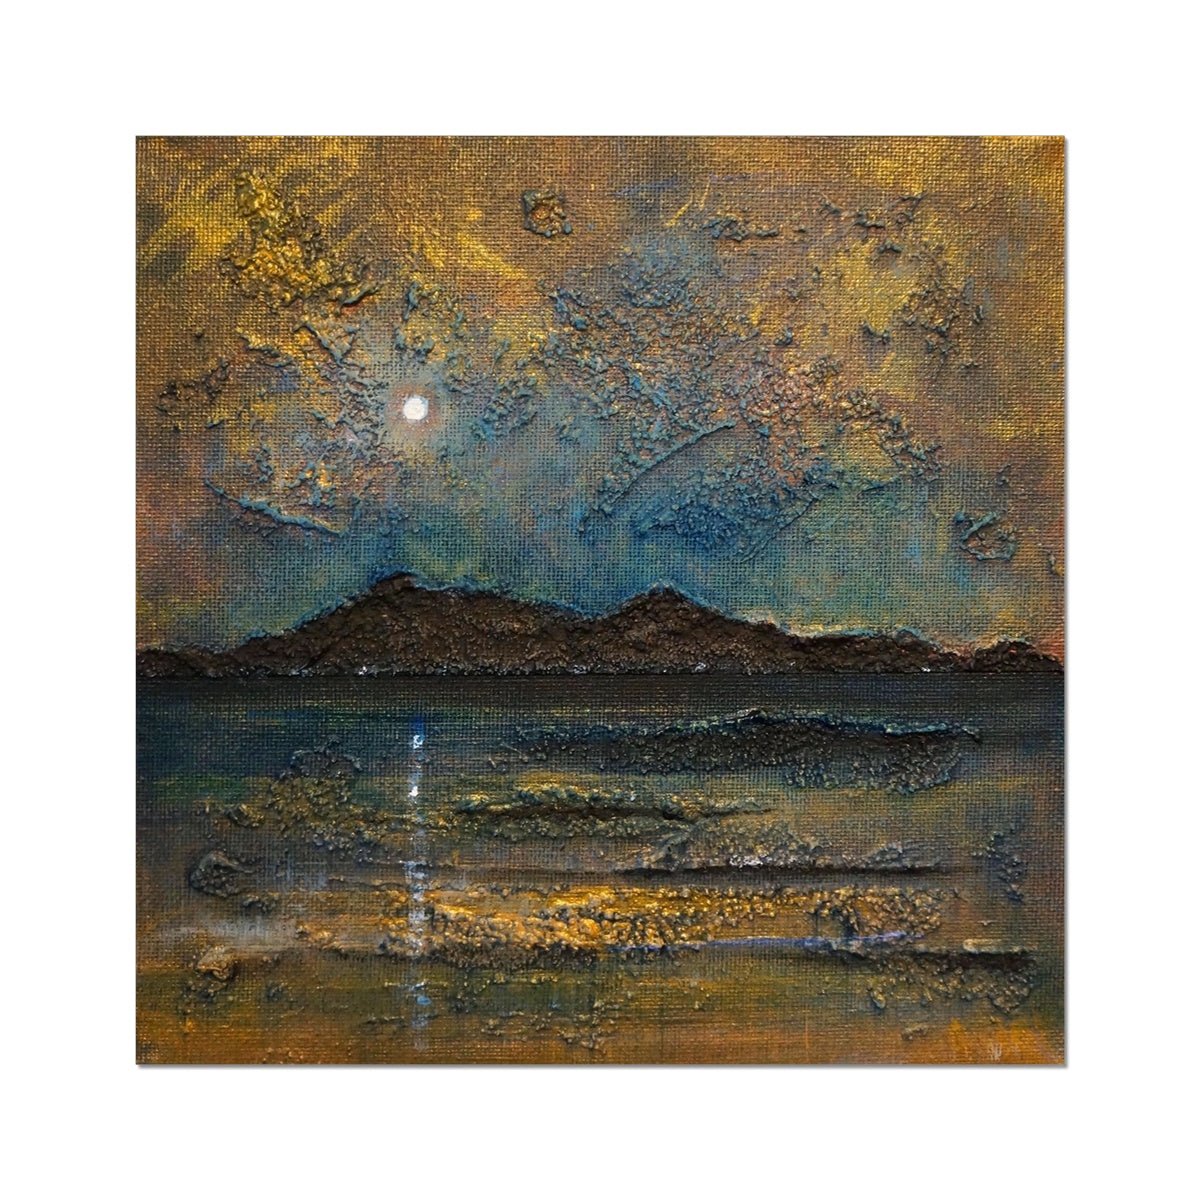 Arran Moonlight Painting | Fine Art Prints From Scotland-Unframed Prints-Arran Art Gallery-24"x24"-Paintings, Prints, Homeware, Art Gifts From Scotland By Scottish Artist Kevin Hunter